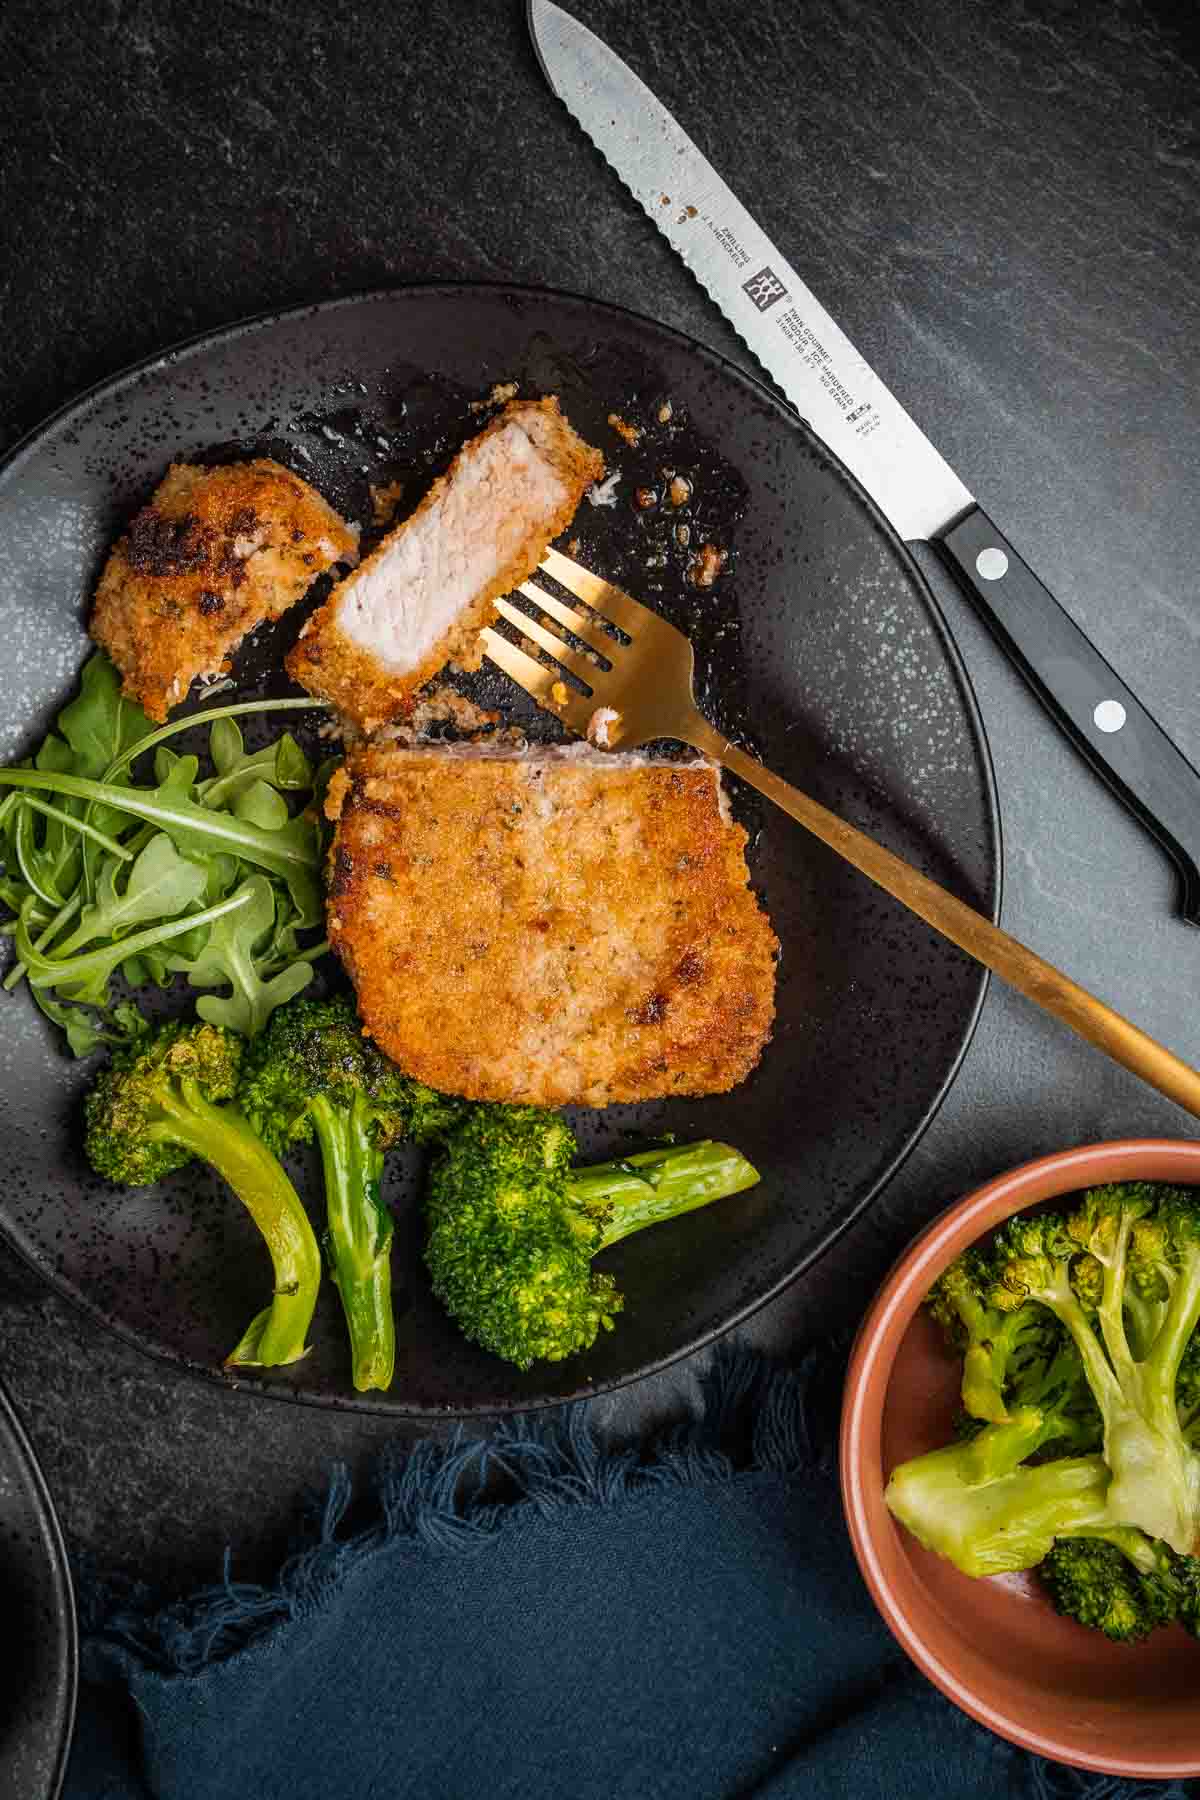 Tender boneless pork chops sliced open to show juicy meat. 